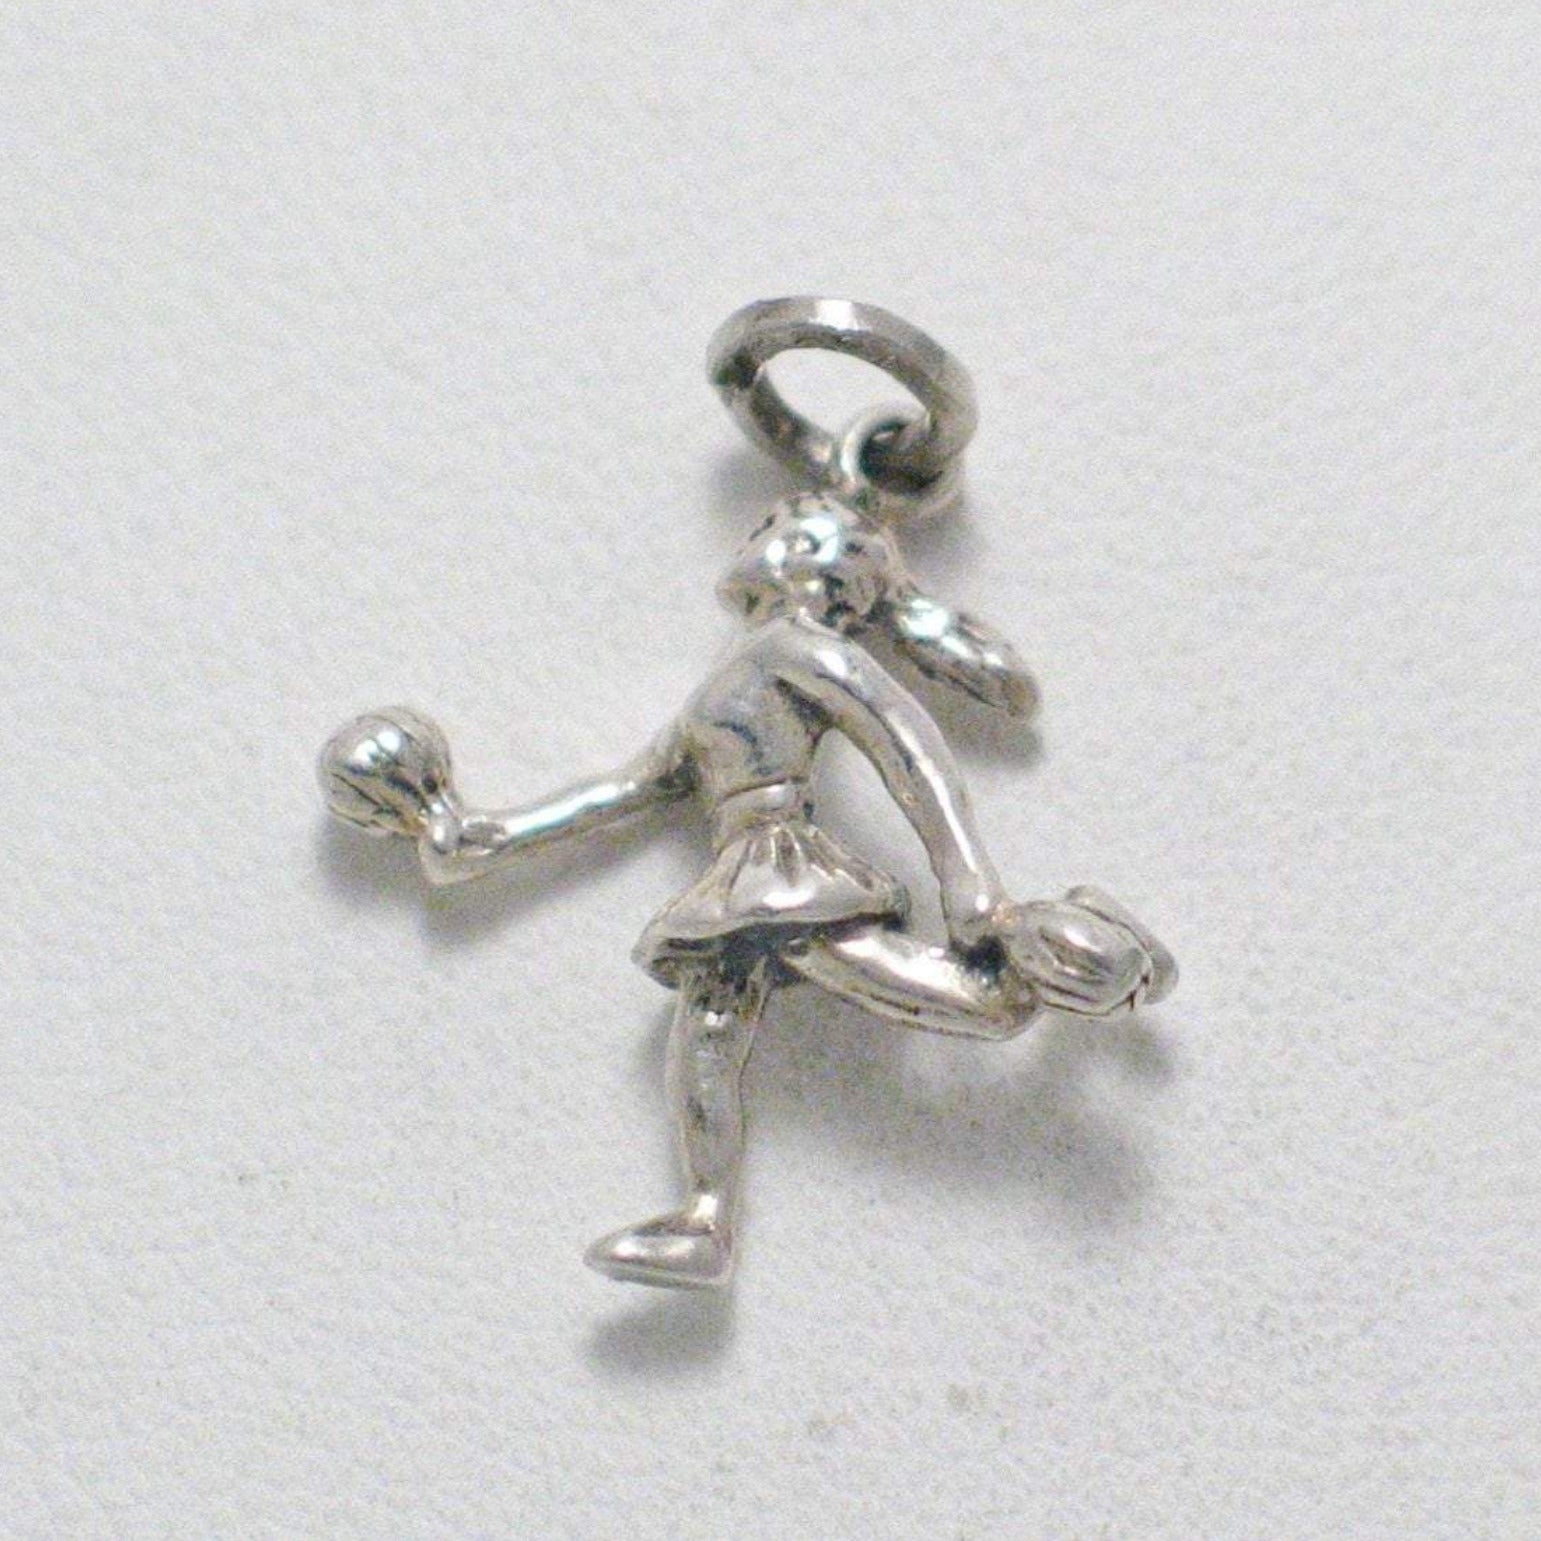 3-D Charm, Sports Fan Vintage 3d Cheerleader Charm Sterling Silver Pendant - Blingschlingers Jewelry